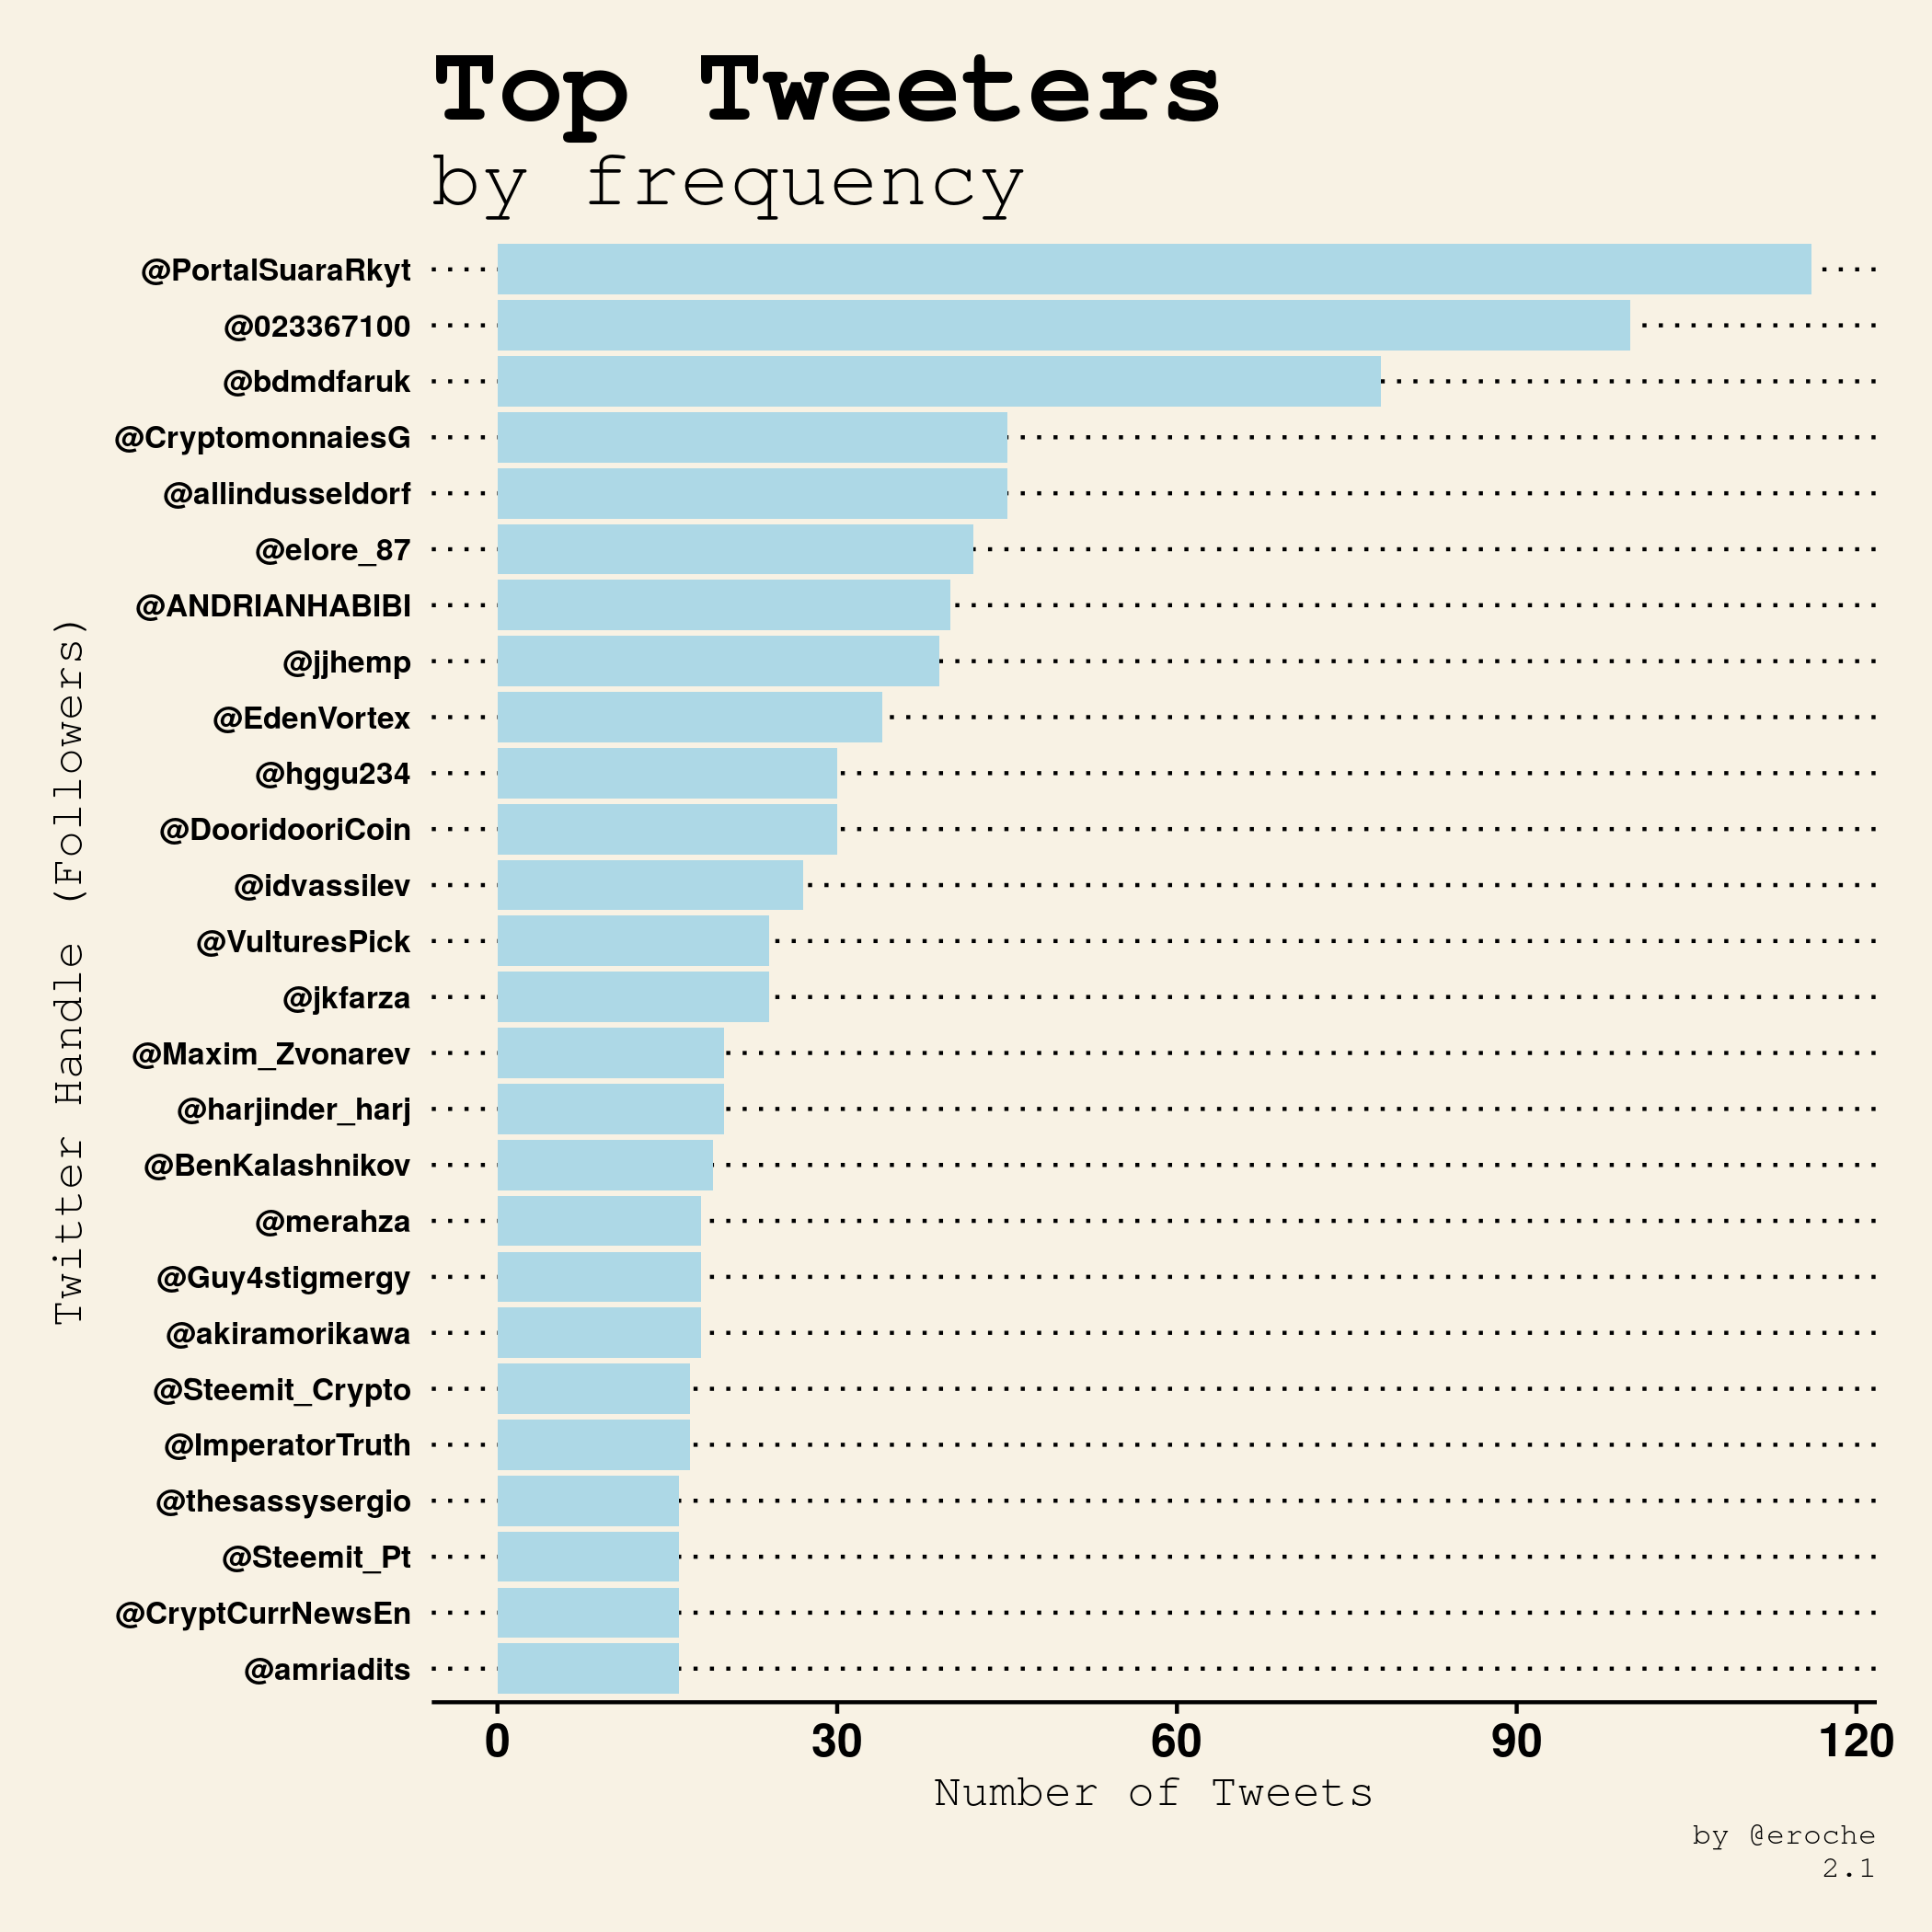 Top Tweeters by frequency_2.1.png